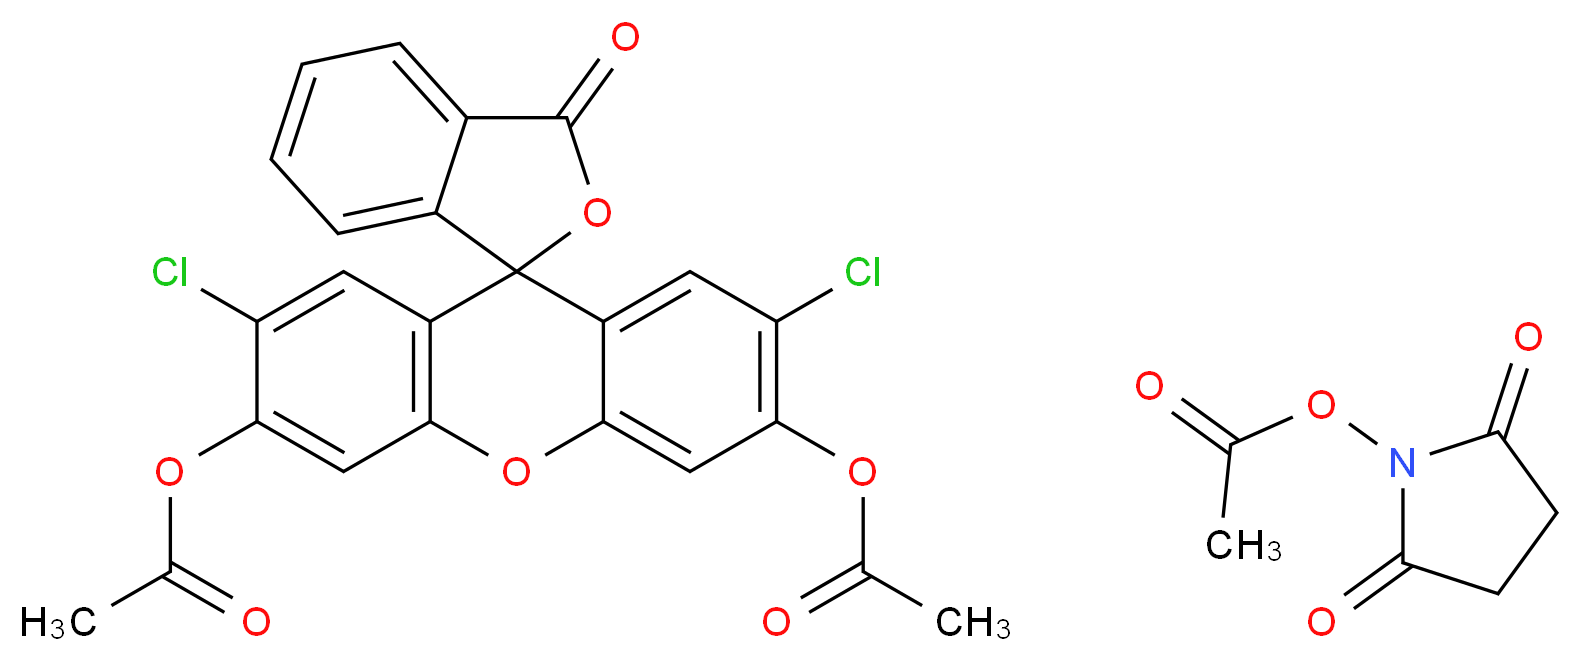 5(6)-Carboxy-2',7'-Dichlorofluorescein Diacetate Succinimidyl Ester _Molecular_structure_CAS_147265-60-9)